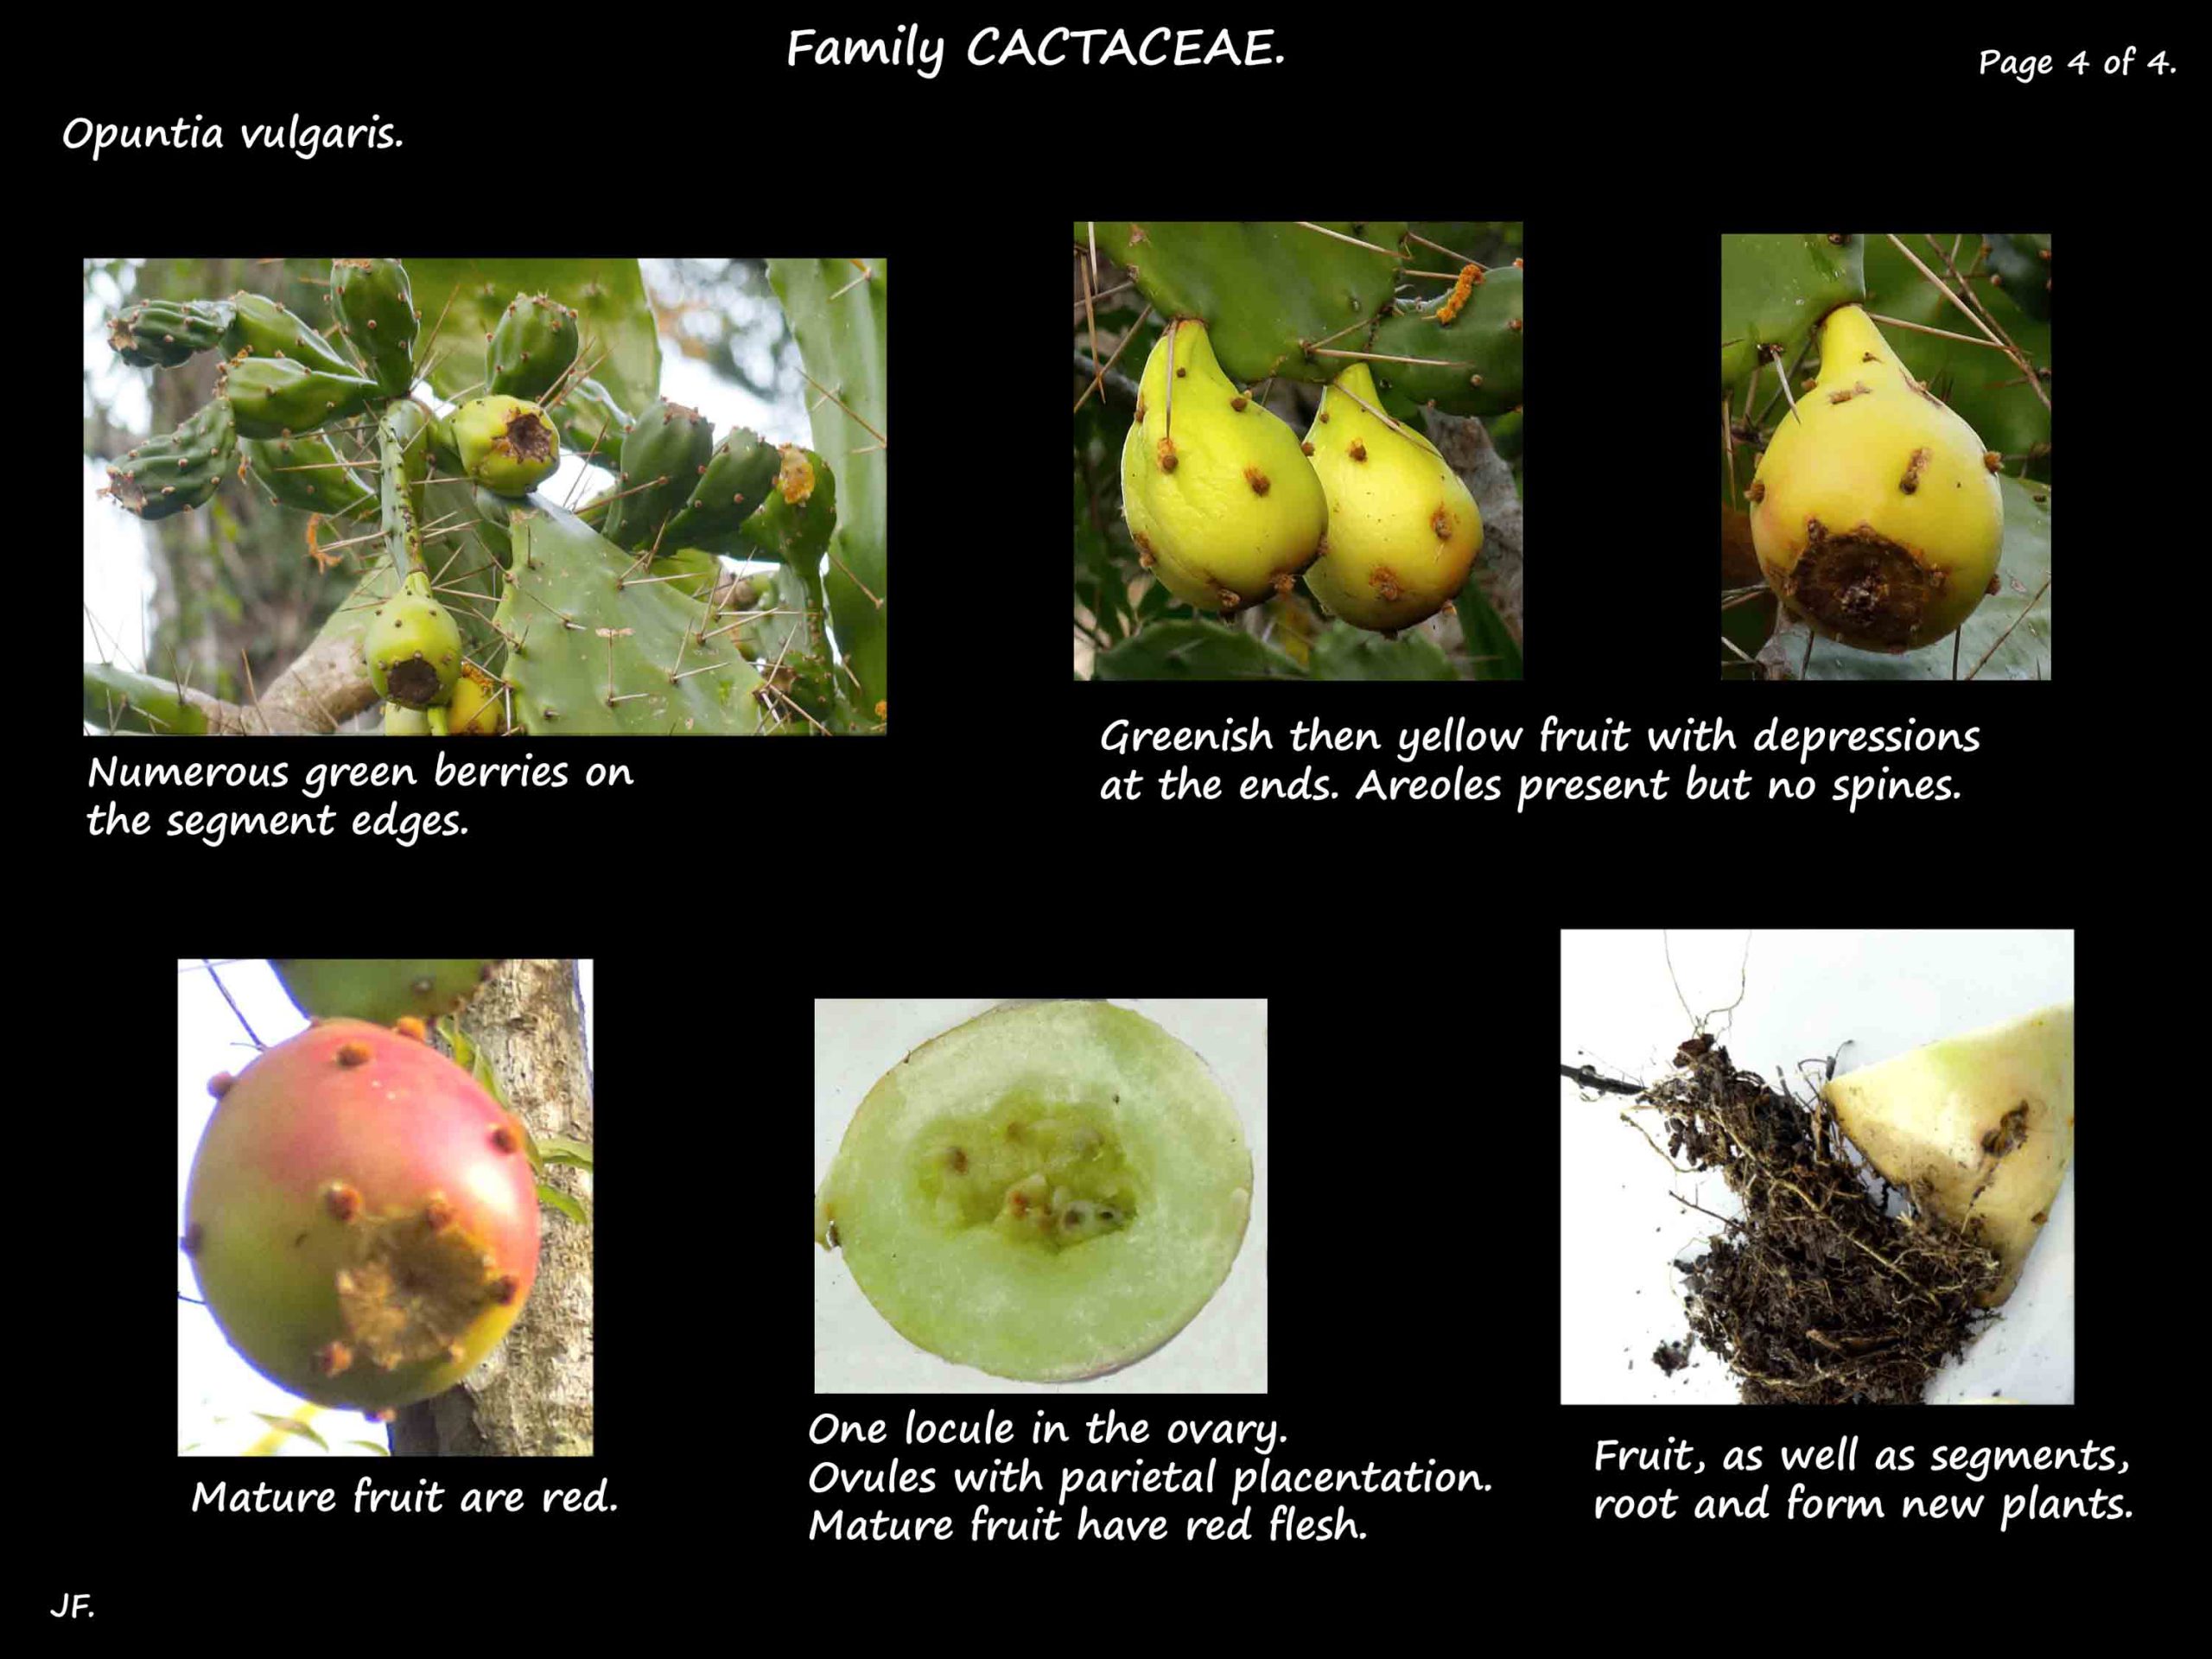 4 Opuntia vulgaris fruit